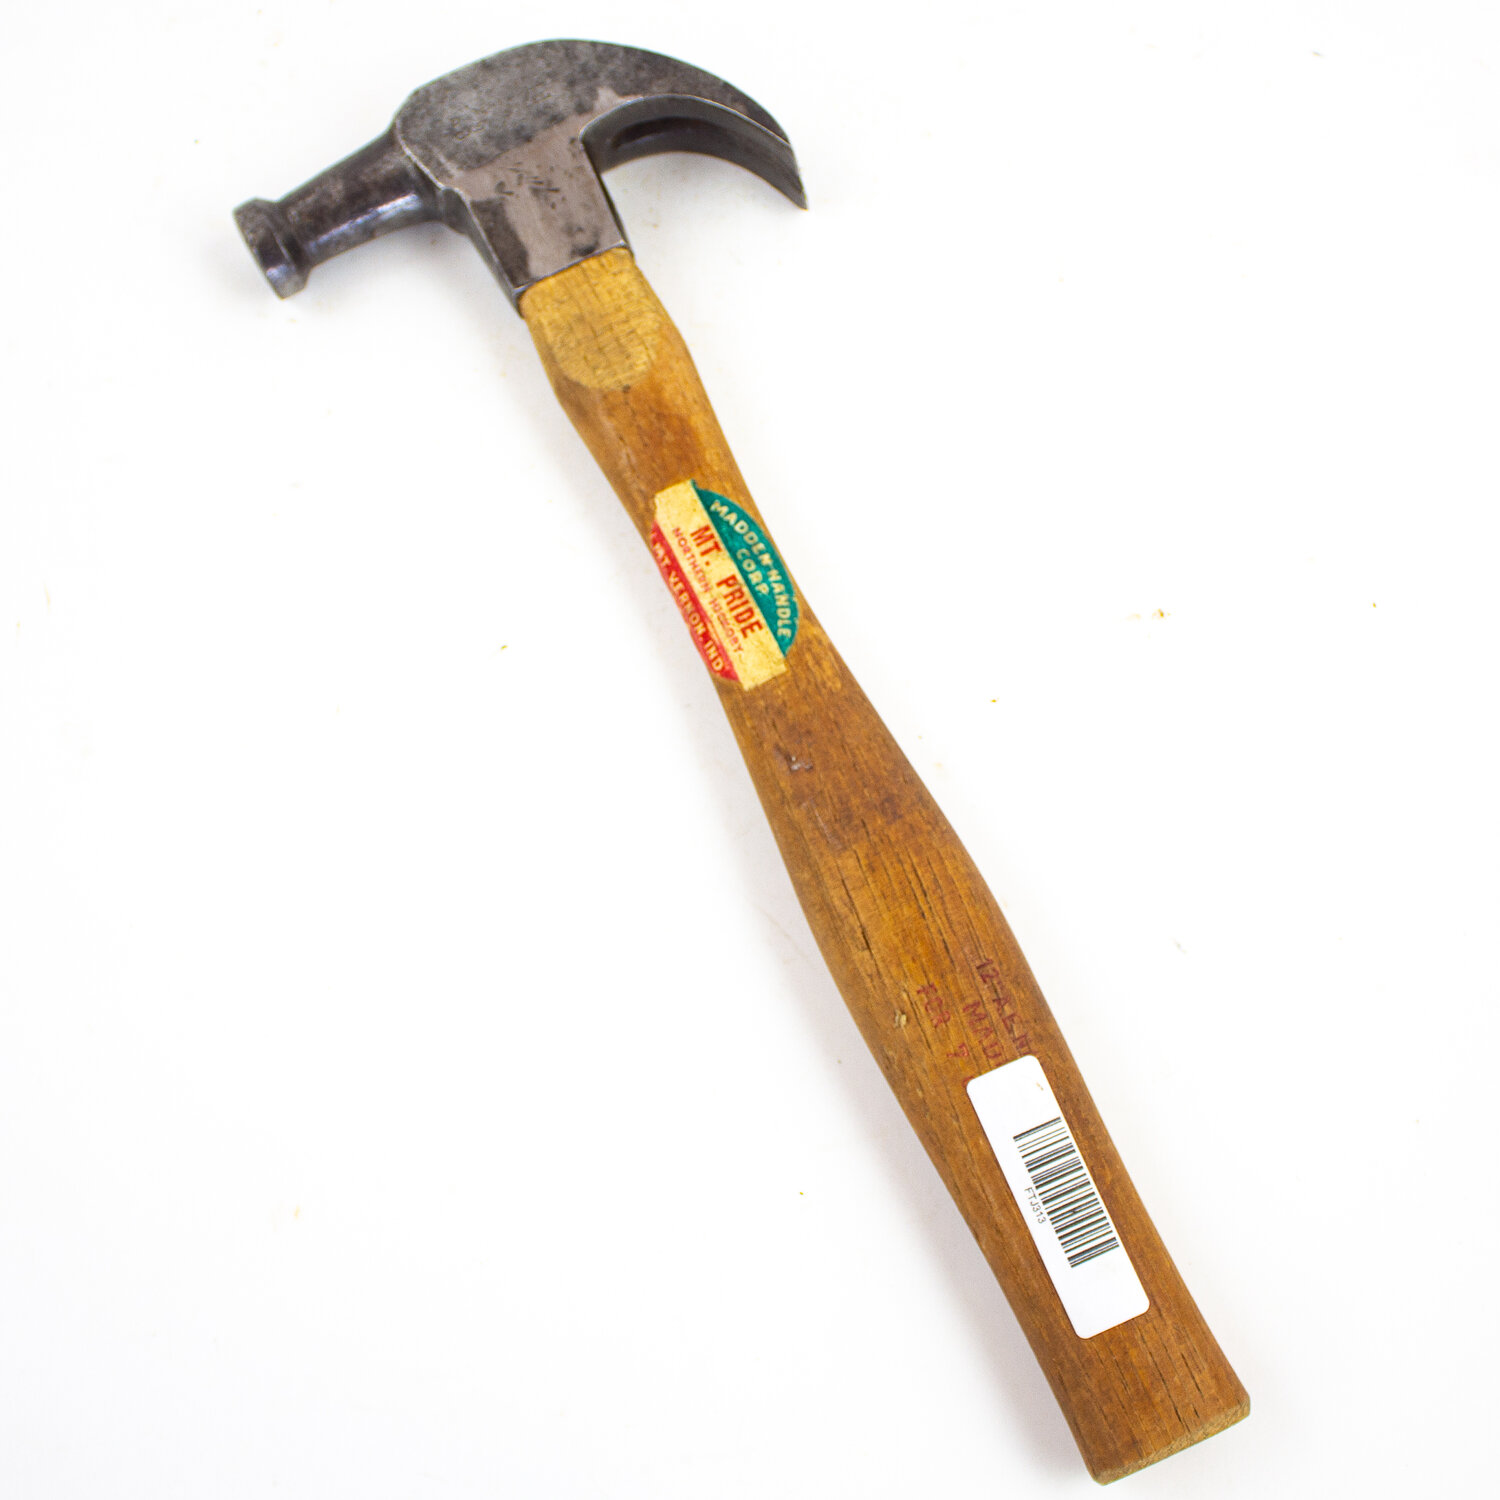 Vintage Stanley Sweetheart hammer 2 1/2 10 oz SW for shop carpenter  collection